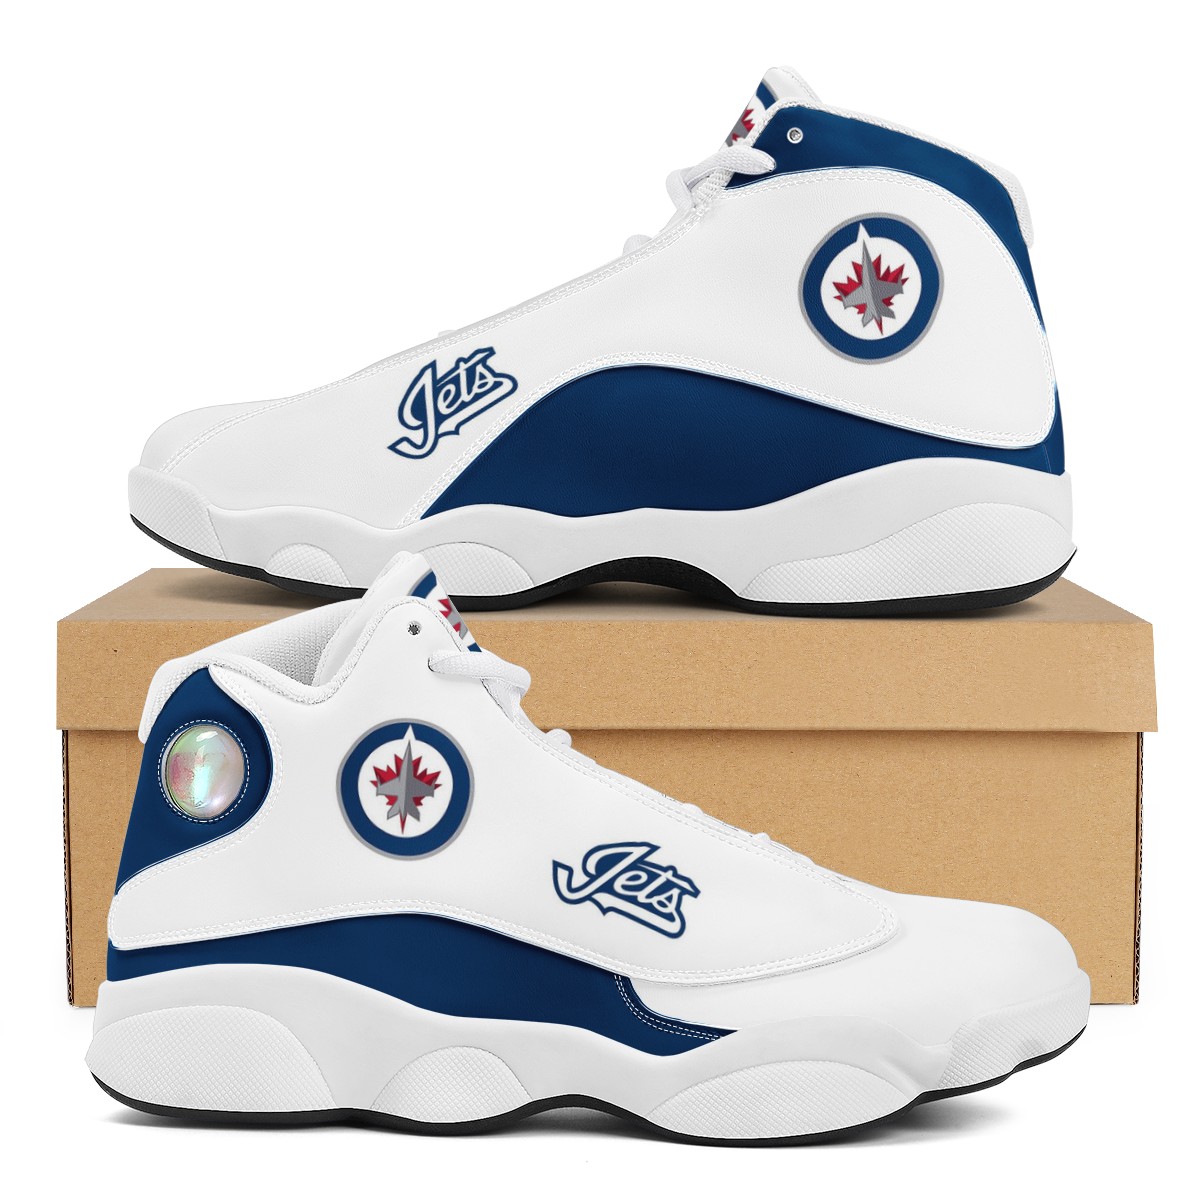 Men's Winnipeg Jets Limited Edition JD13 Sneakers 001